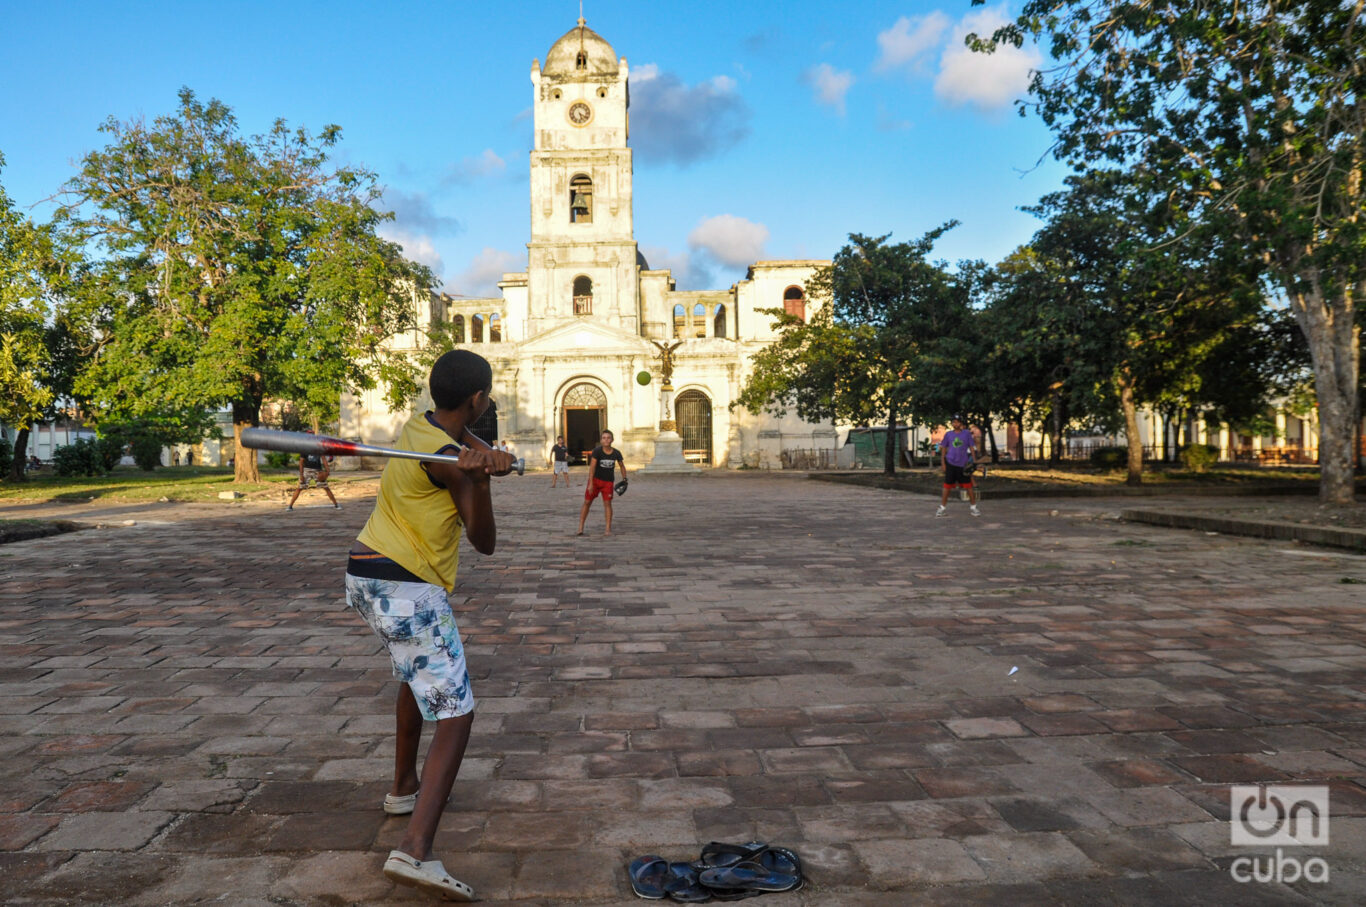 A group of children plays ball in San José Park. Photo: Kaloian.